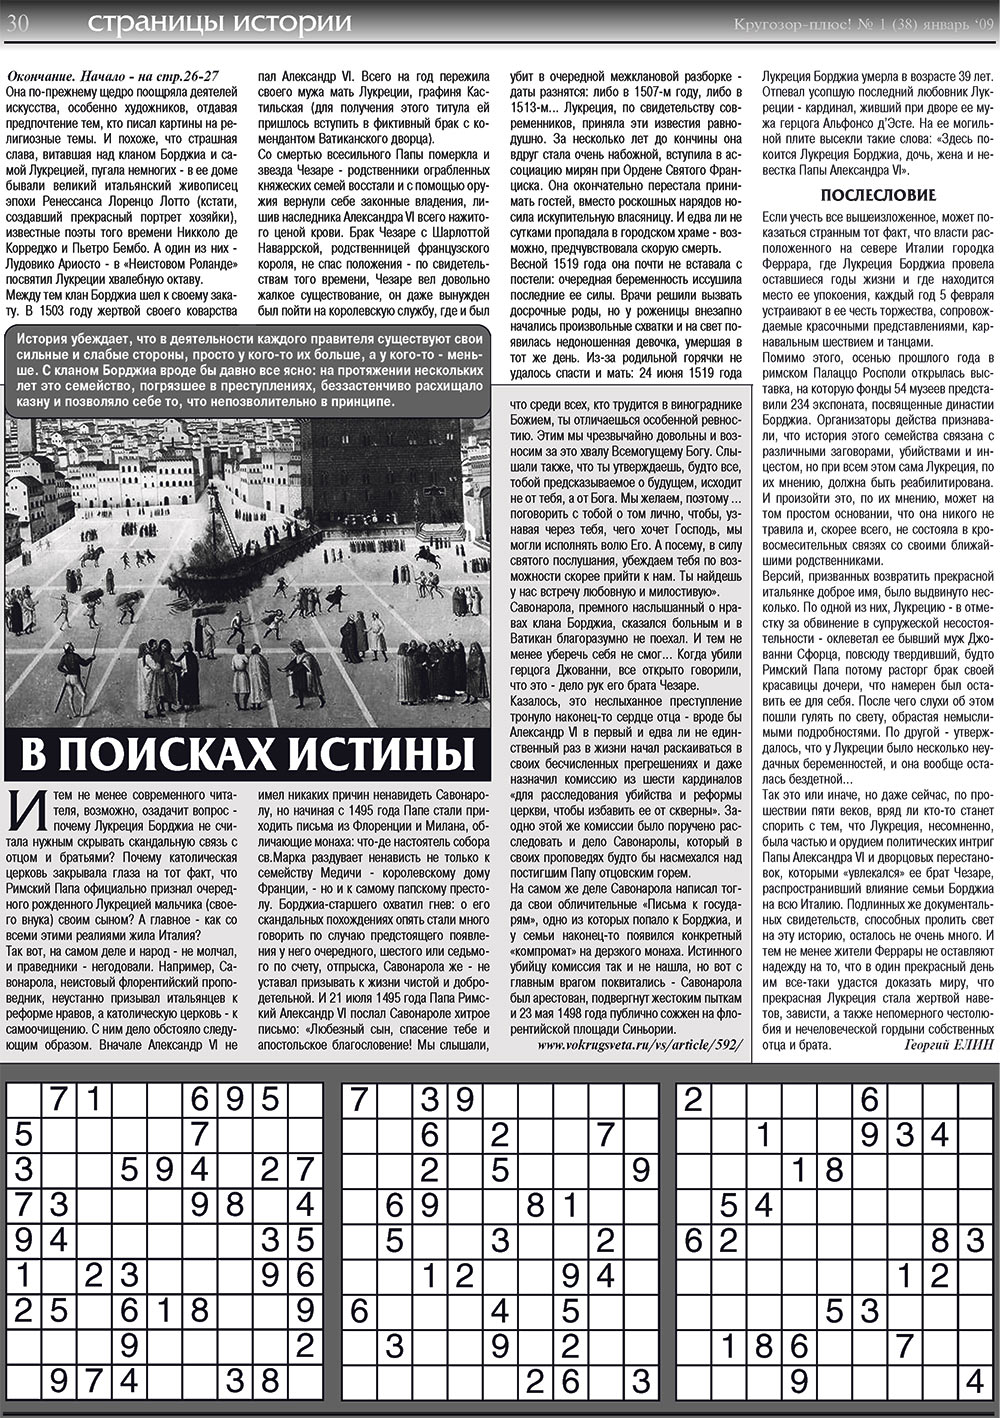 Кругозор плюс! (газета). 2009 год, номер 1, стр. 30